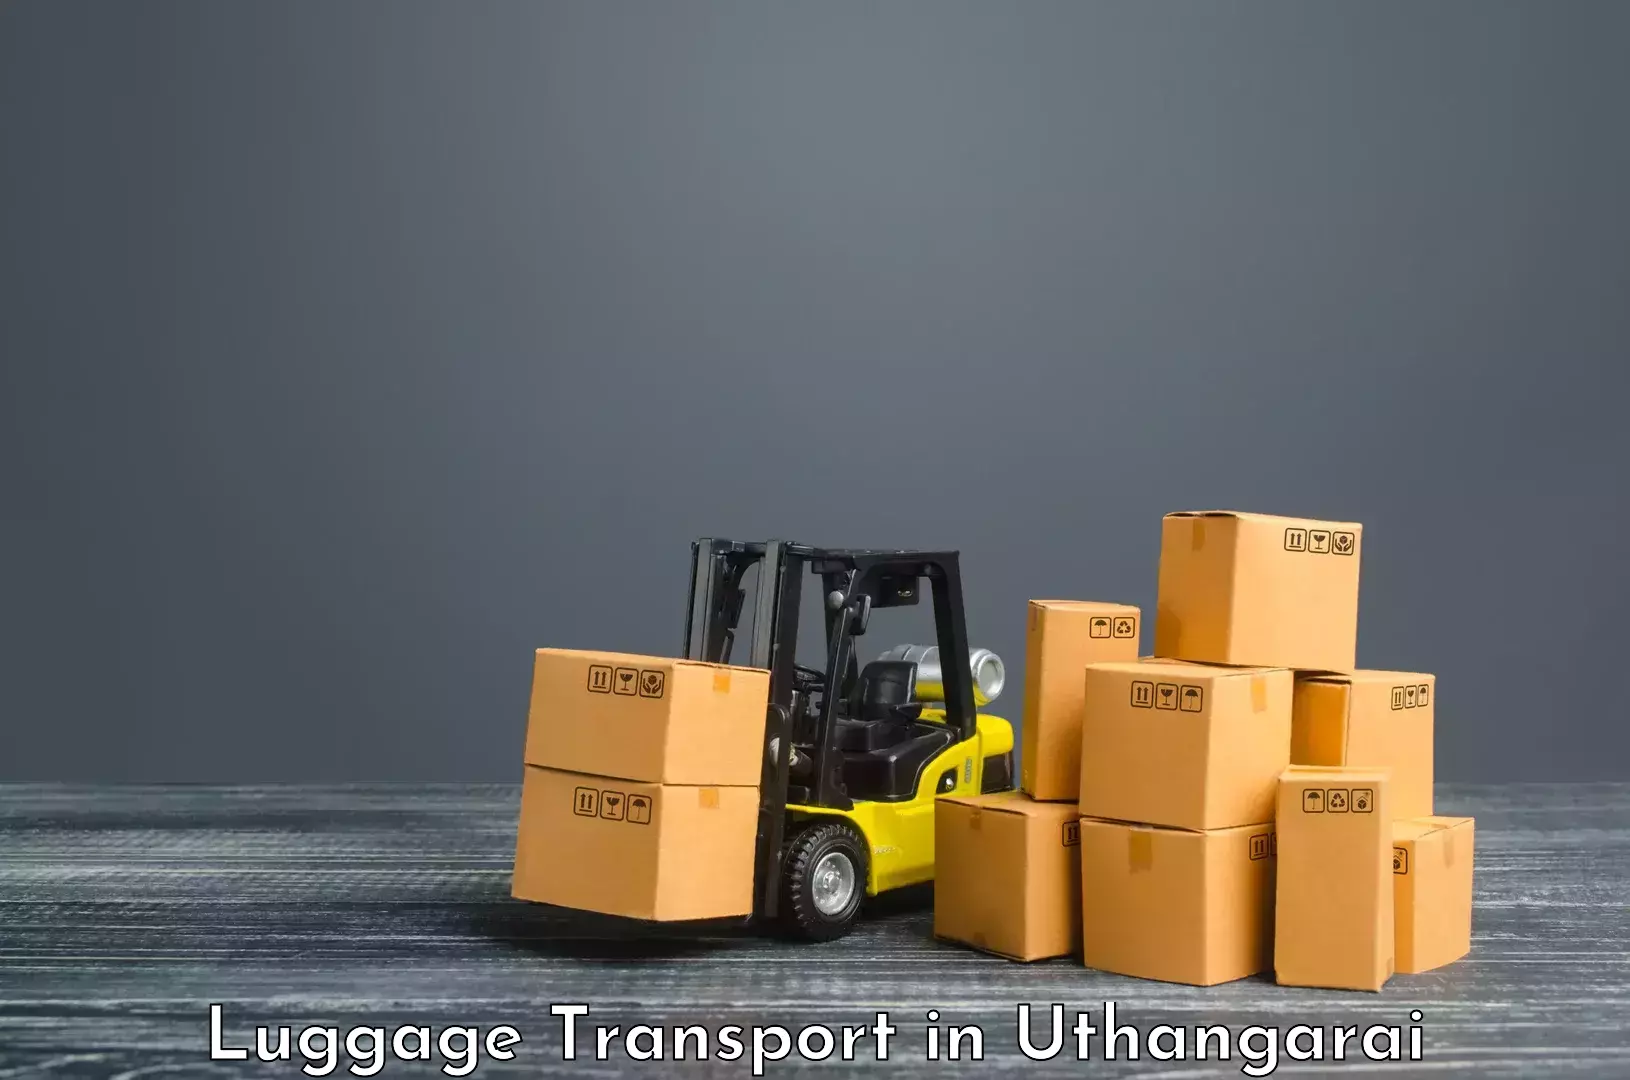 Business luggage transport in Uthangarai